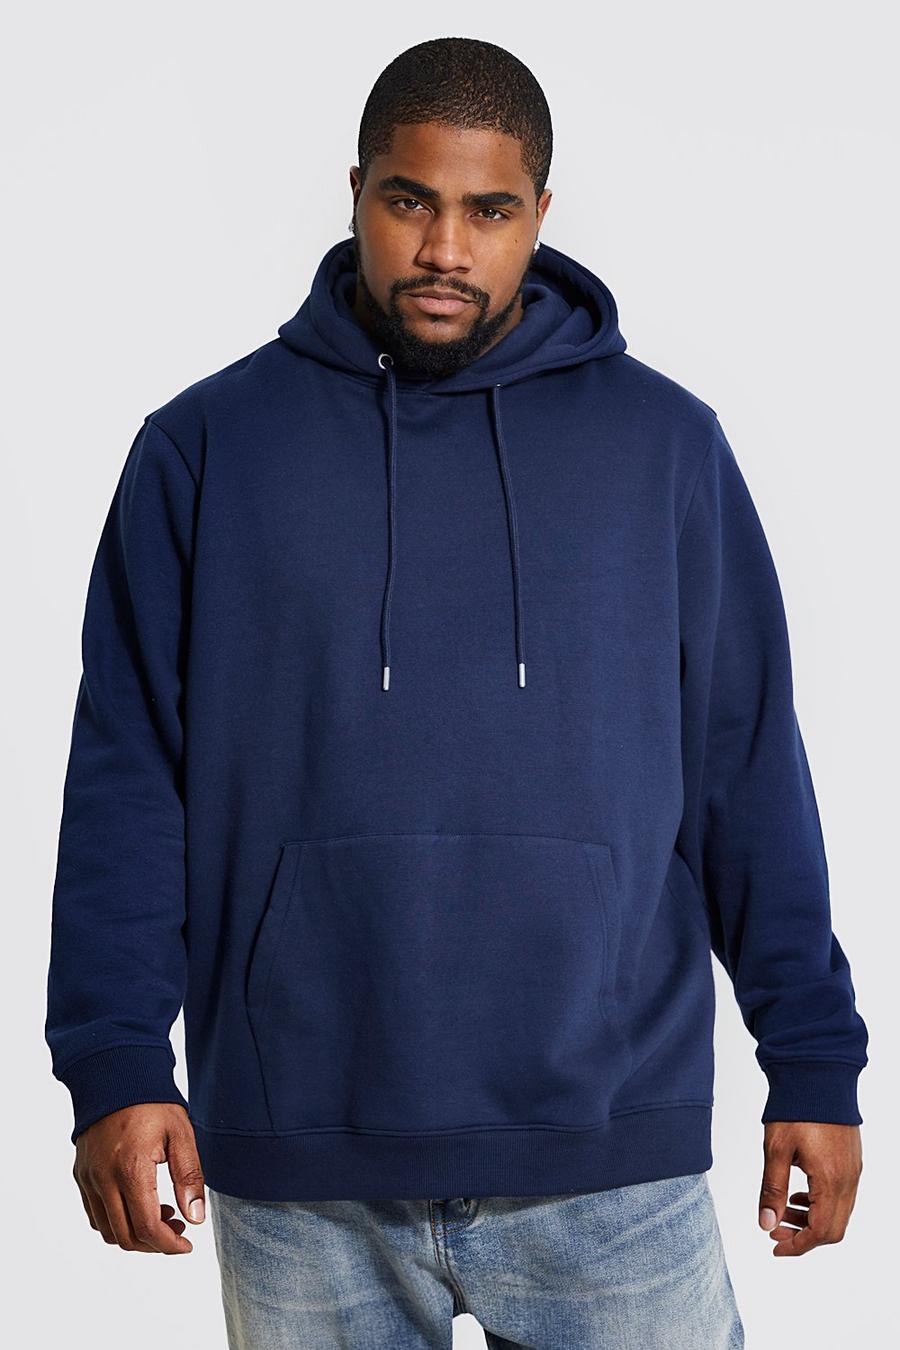 discount 89% JHK sweatshirt MEN FASHION Jumpers & Sweatshirts Fleece Navy Blue L 